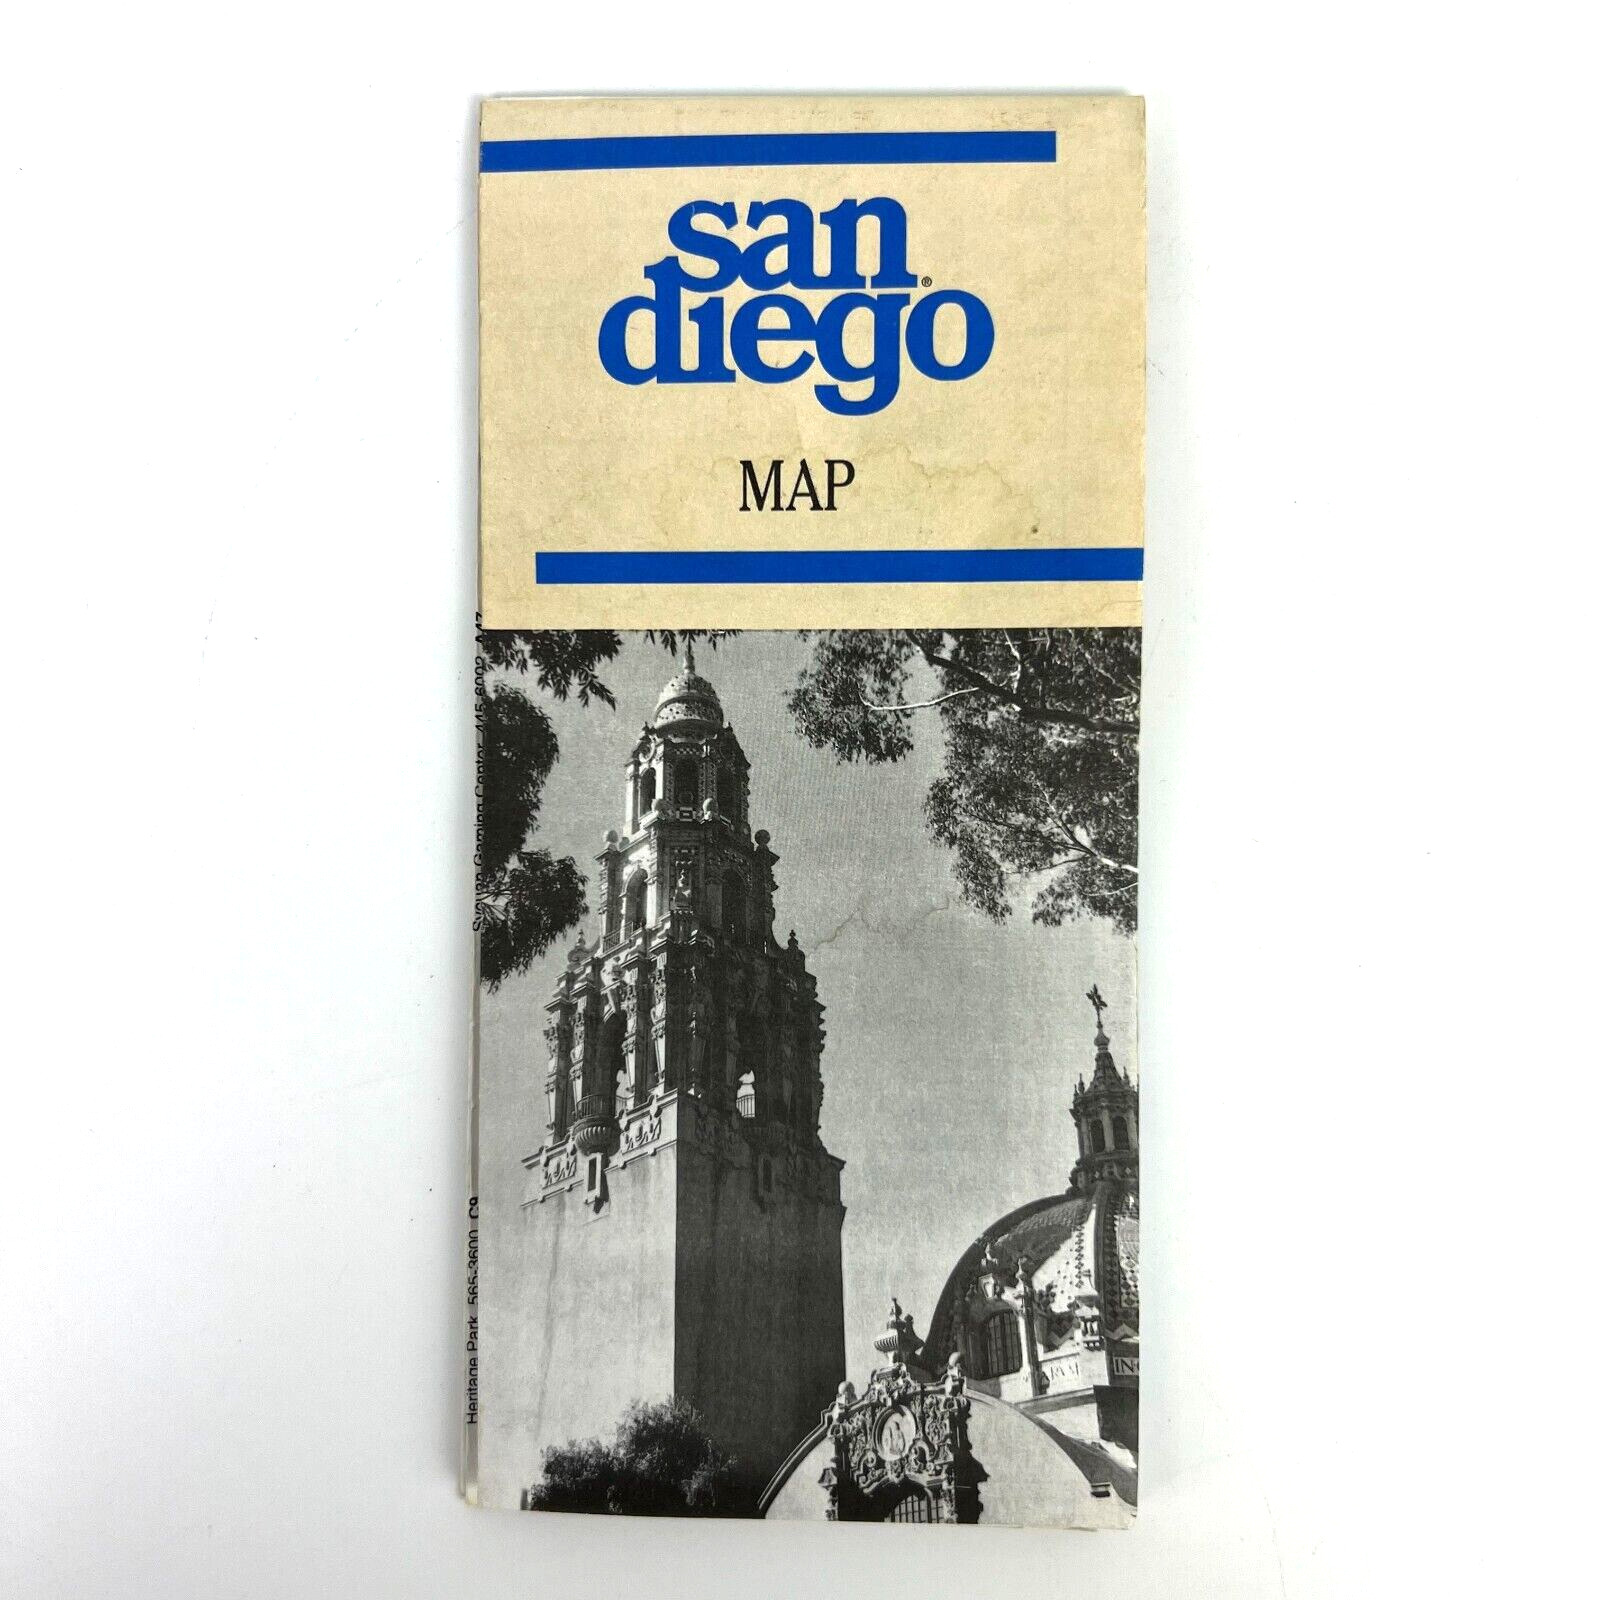 Vintage San Diego, California Travel Map 1992 America's Cup Restaurants Hotels